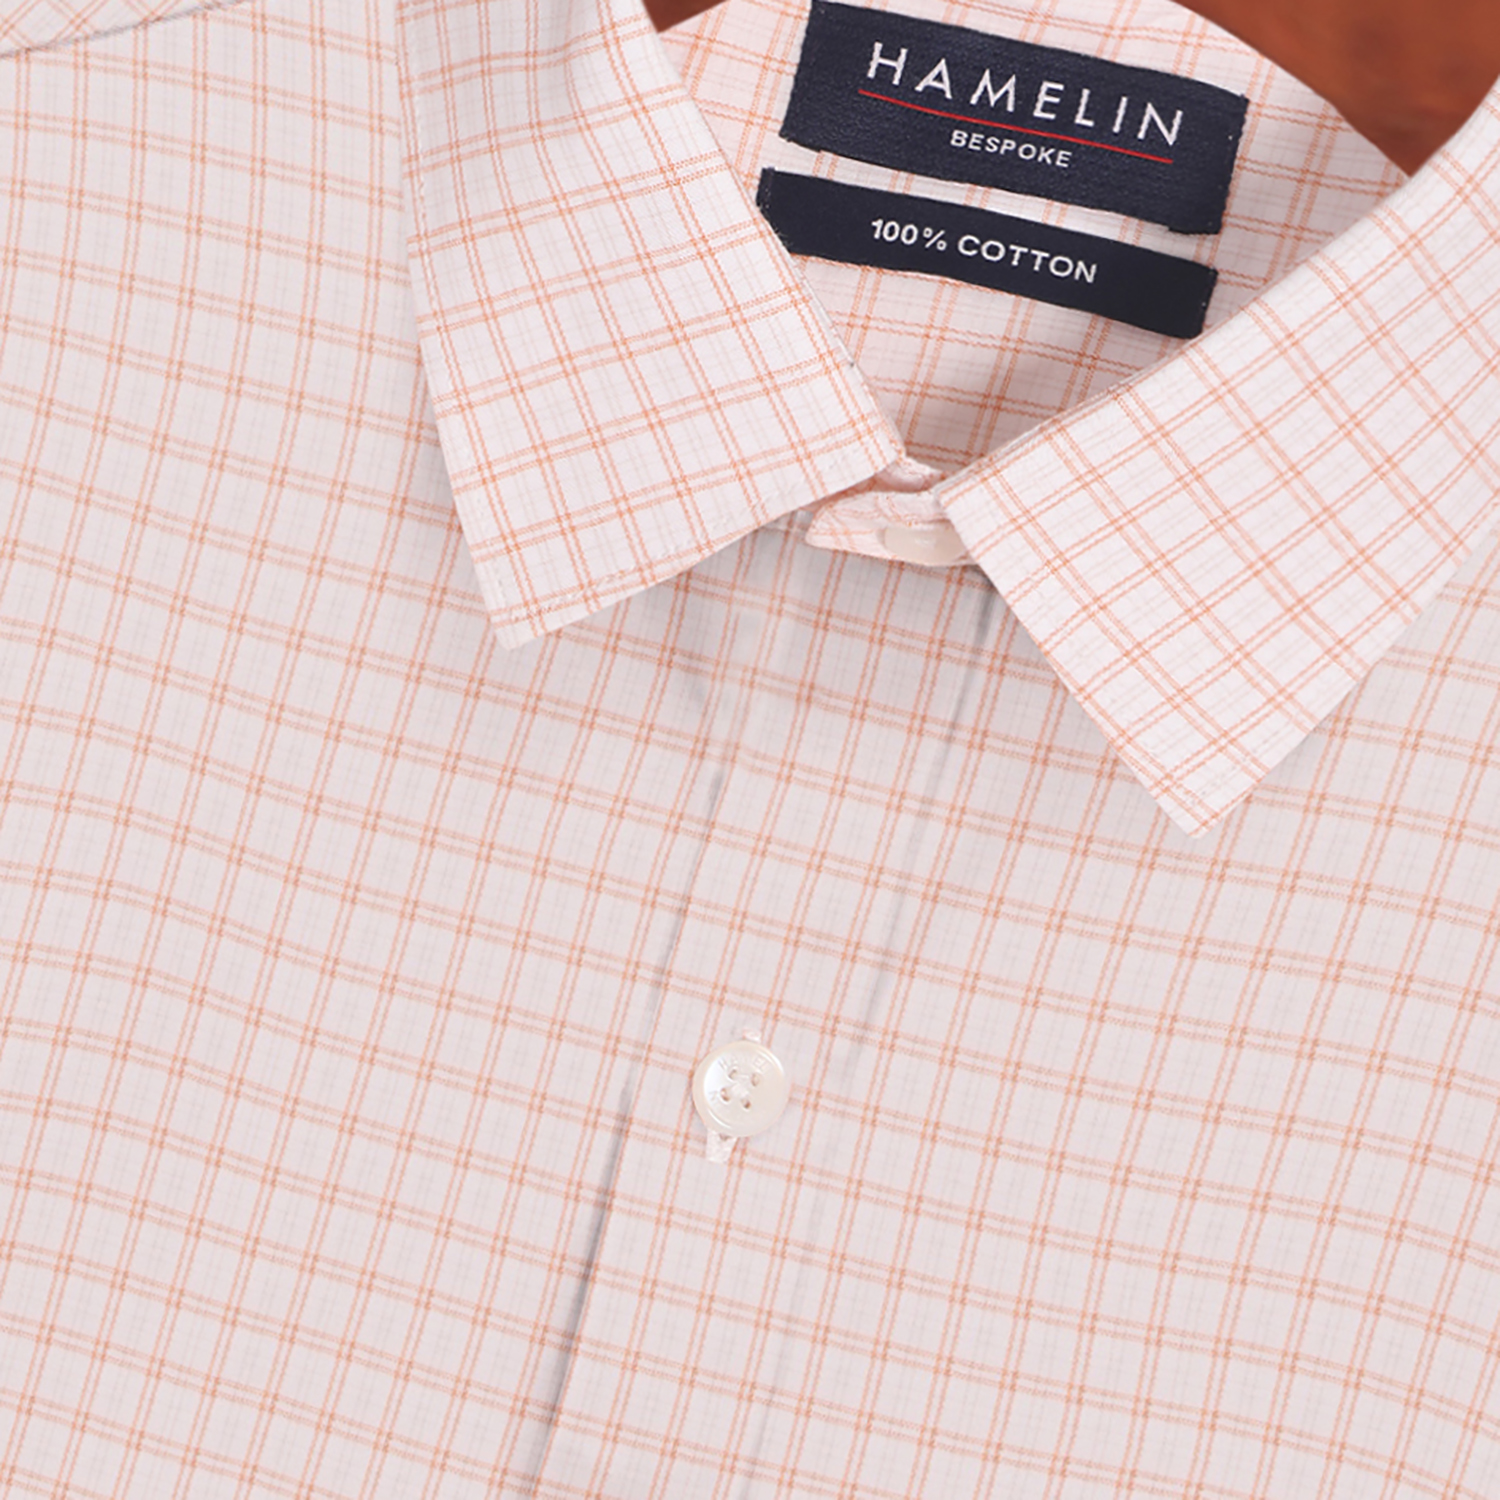 Buy red and white twin checks shirt online - Hamelin bespoke